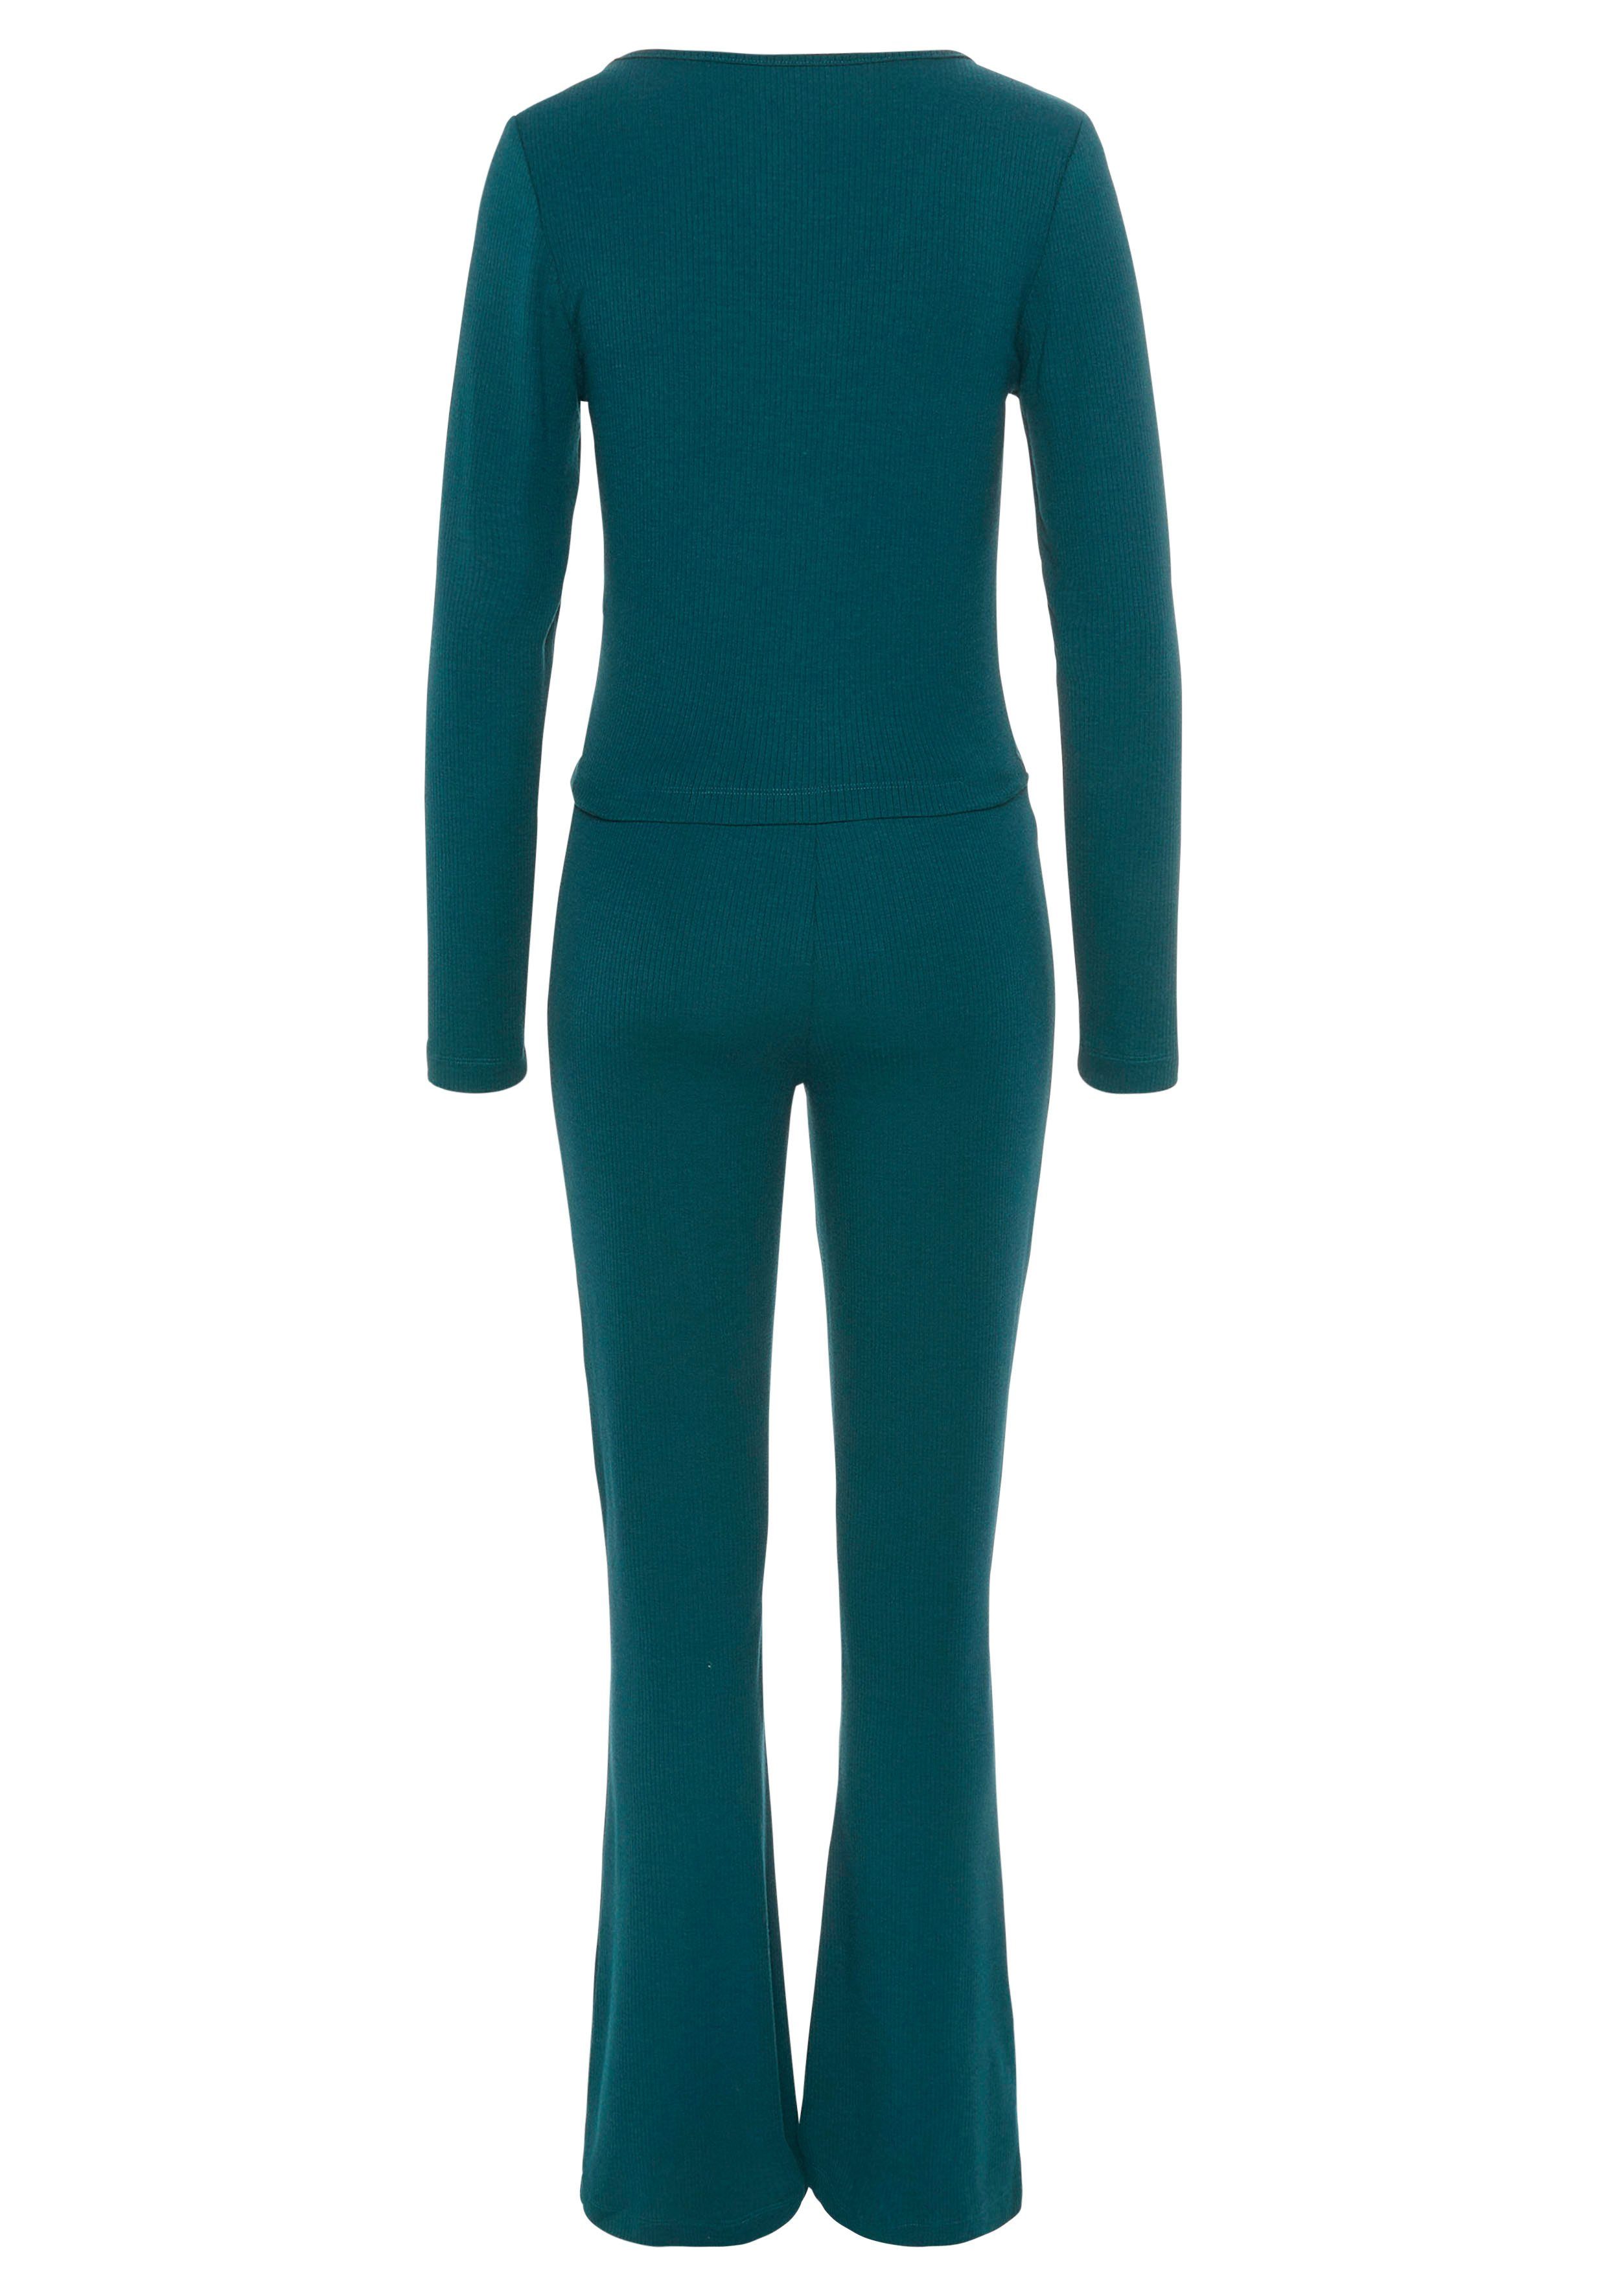 LASCANA Pyjama (Set, tlg) aus dunkelgrün 2 schönem Ripp-Material